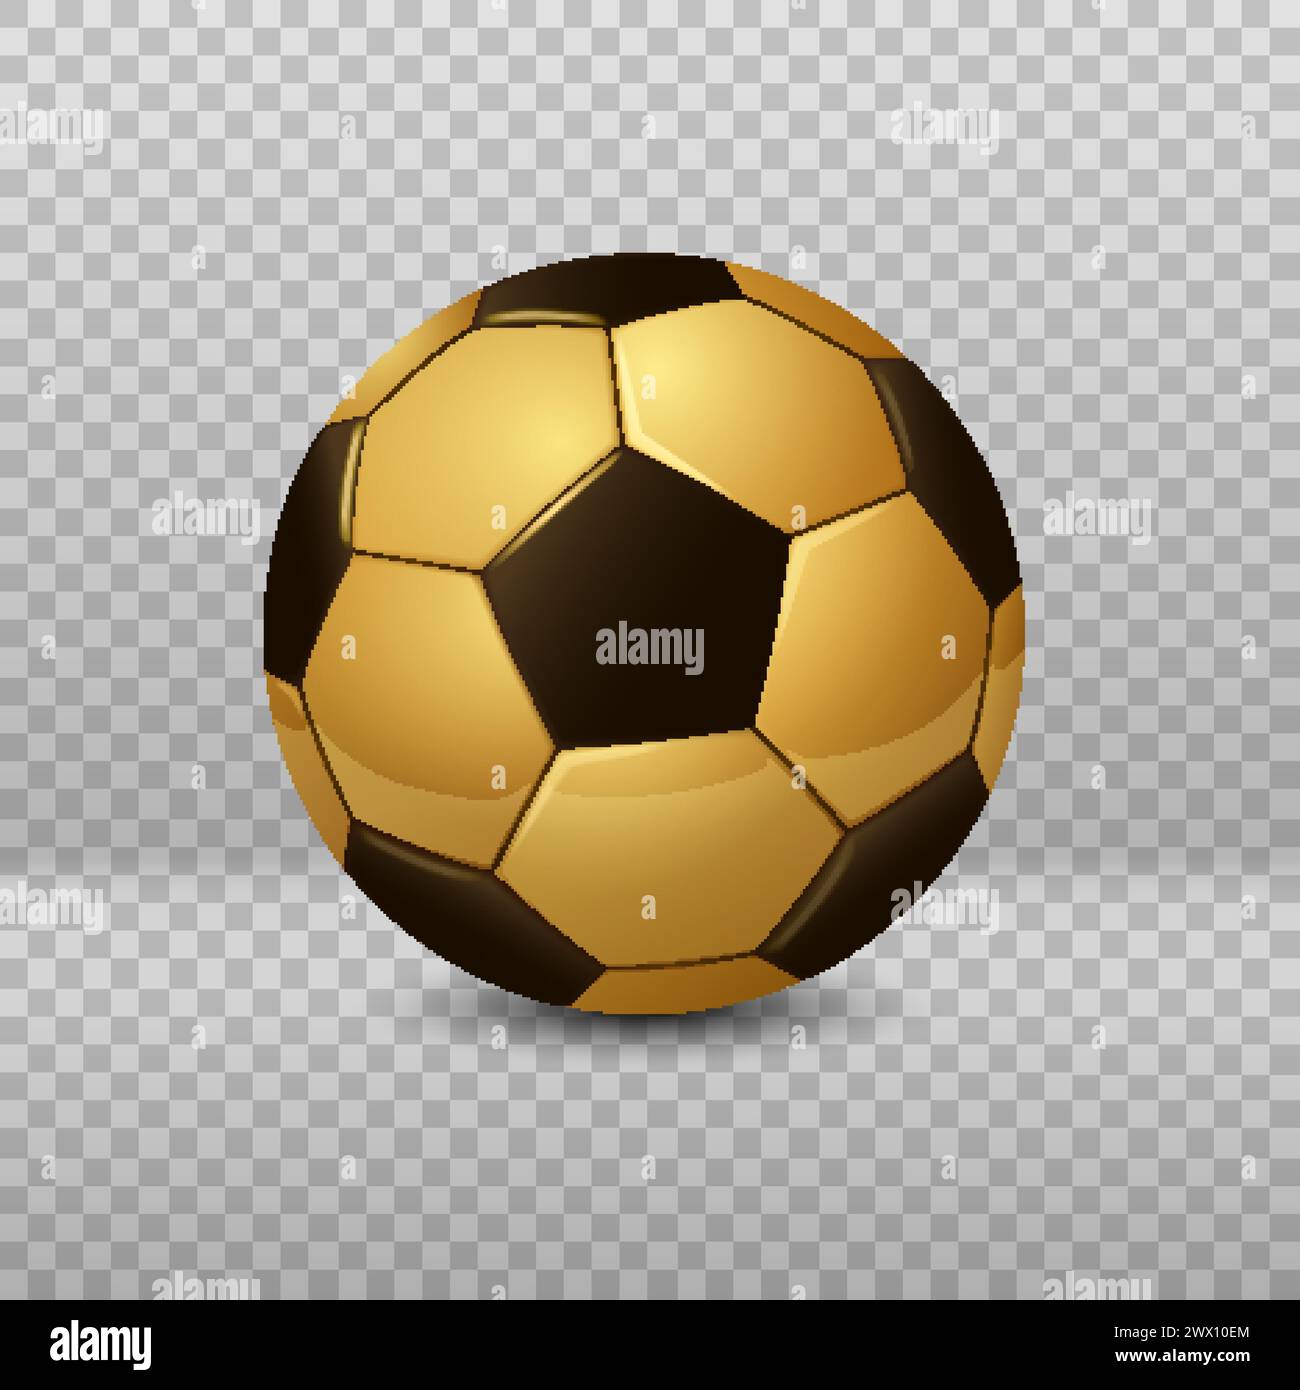 Detailed Golden Soccer Ball Isolated on Transparent Background, Vector Illustration Stock Vector